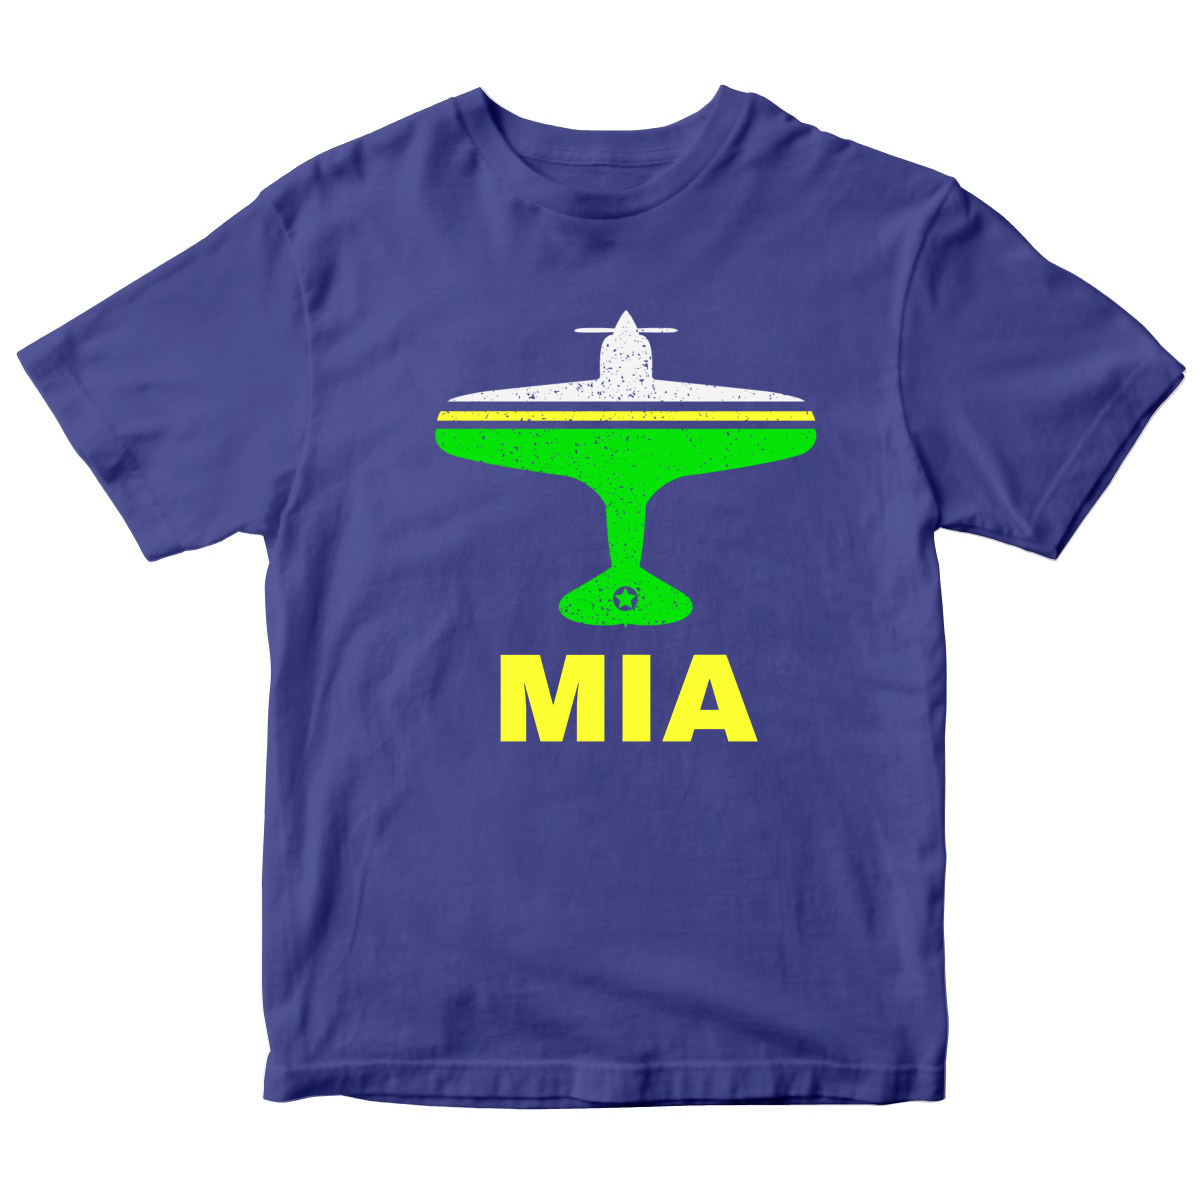 Fly Miami MIA Airport Kids T-shirt | Blue